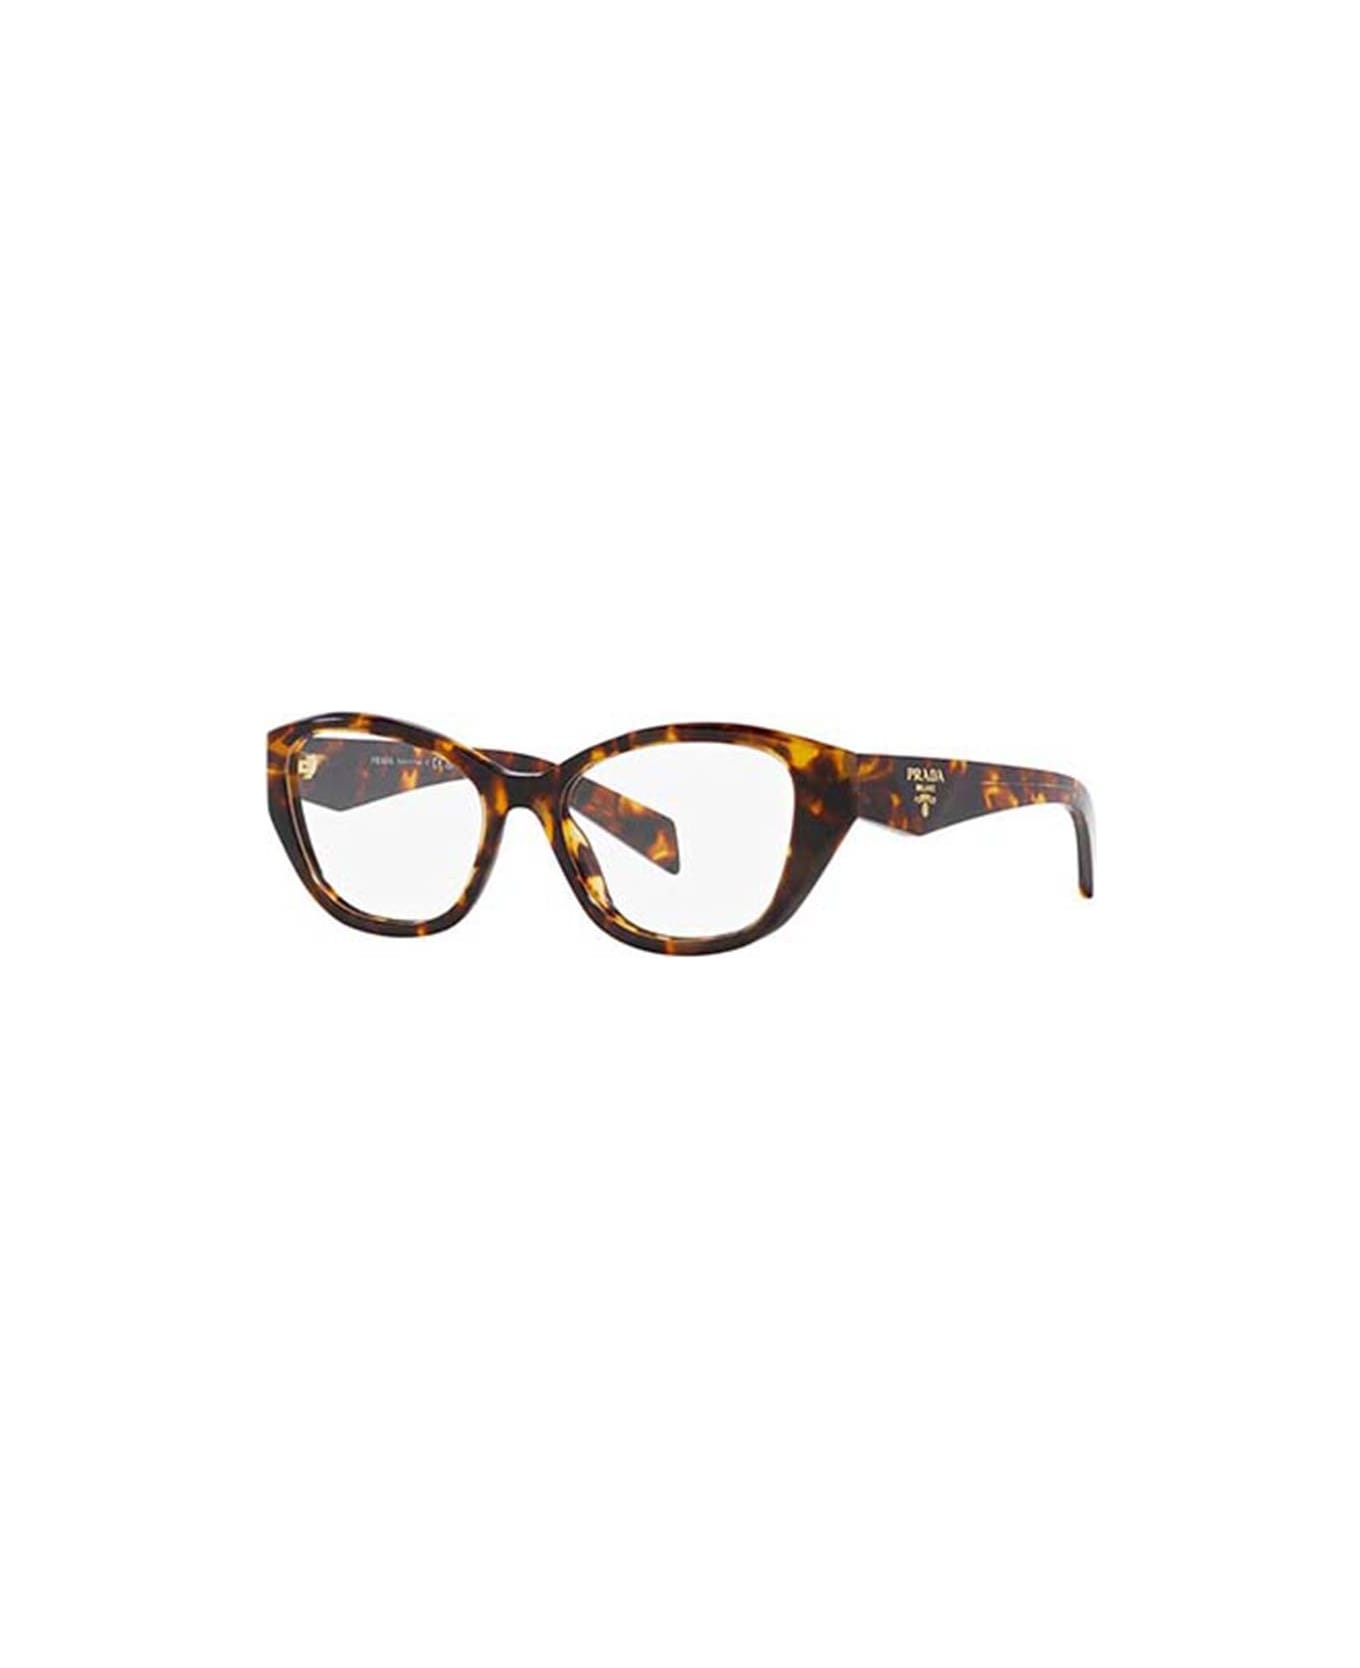 Prada Eyewear Glasses - 14L1O1